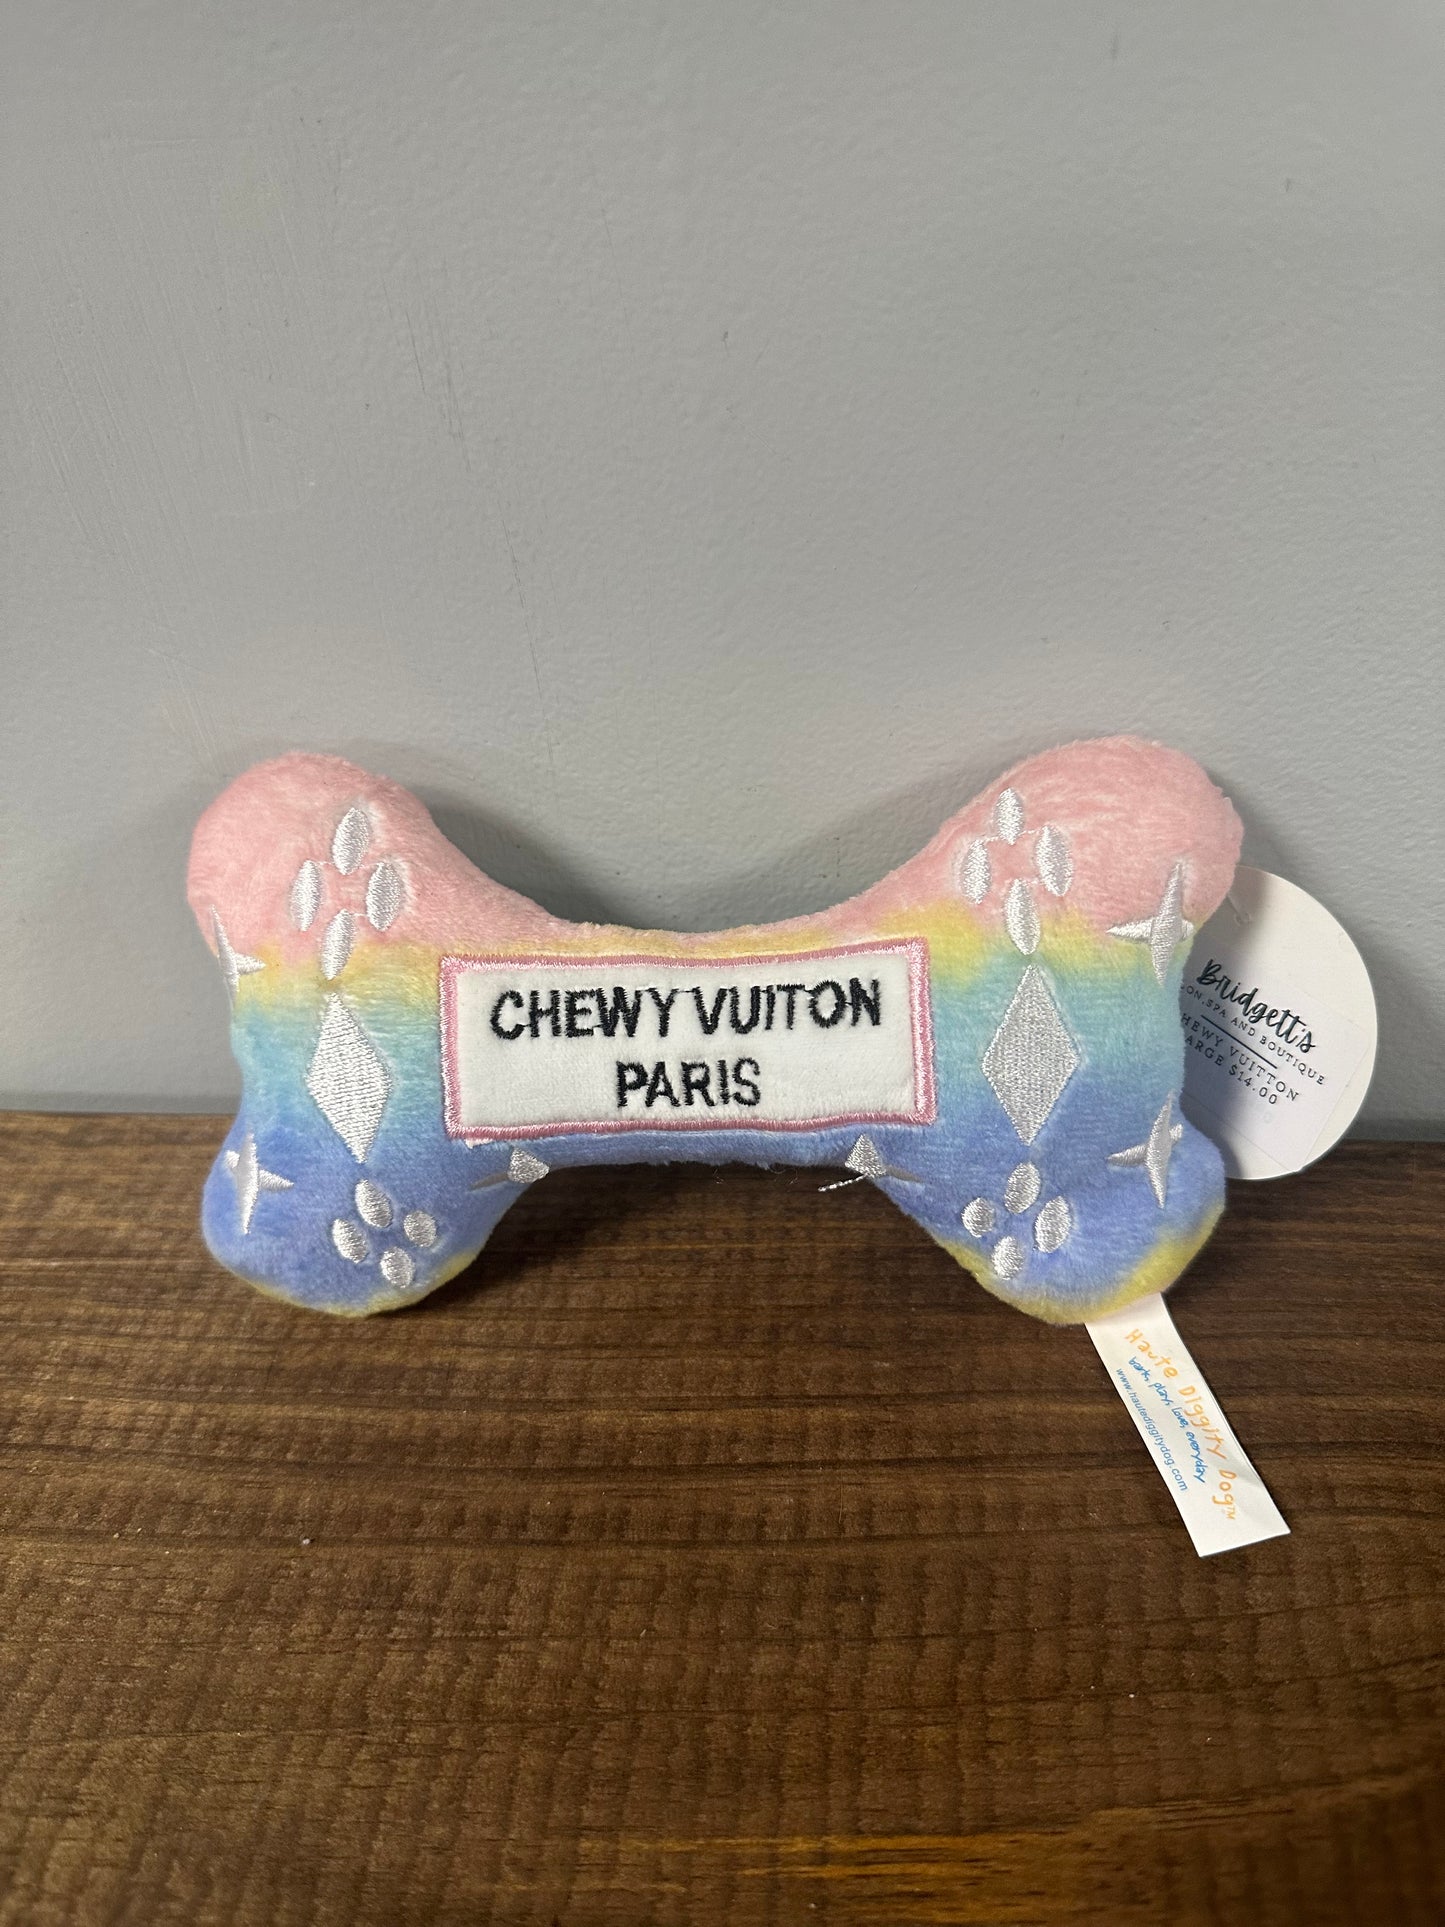 Chewy Vuitton Paris Dog Toys